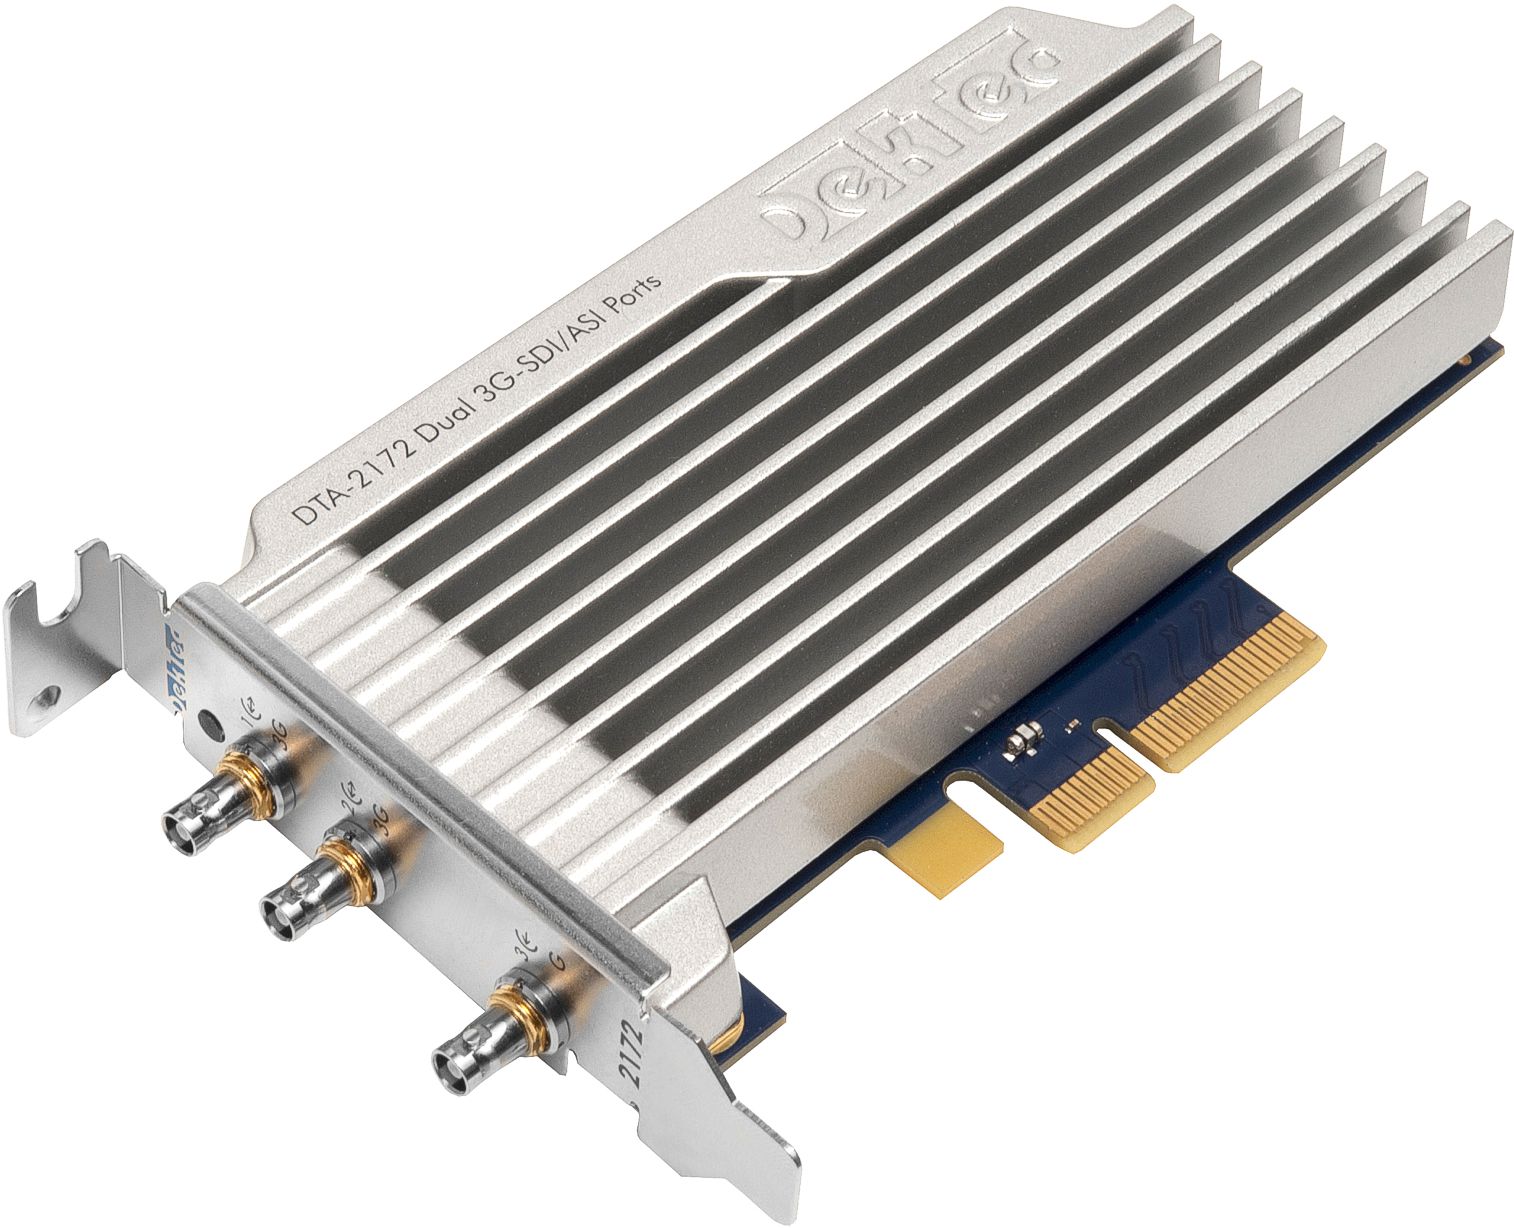 DTA-2172 Dual 3G-SDI/ASI Ports for PCIe